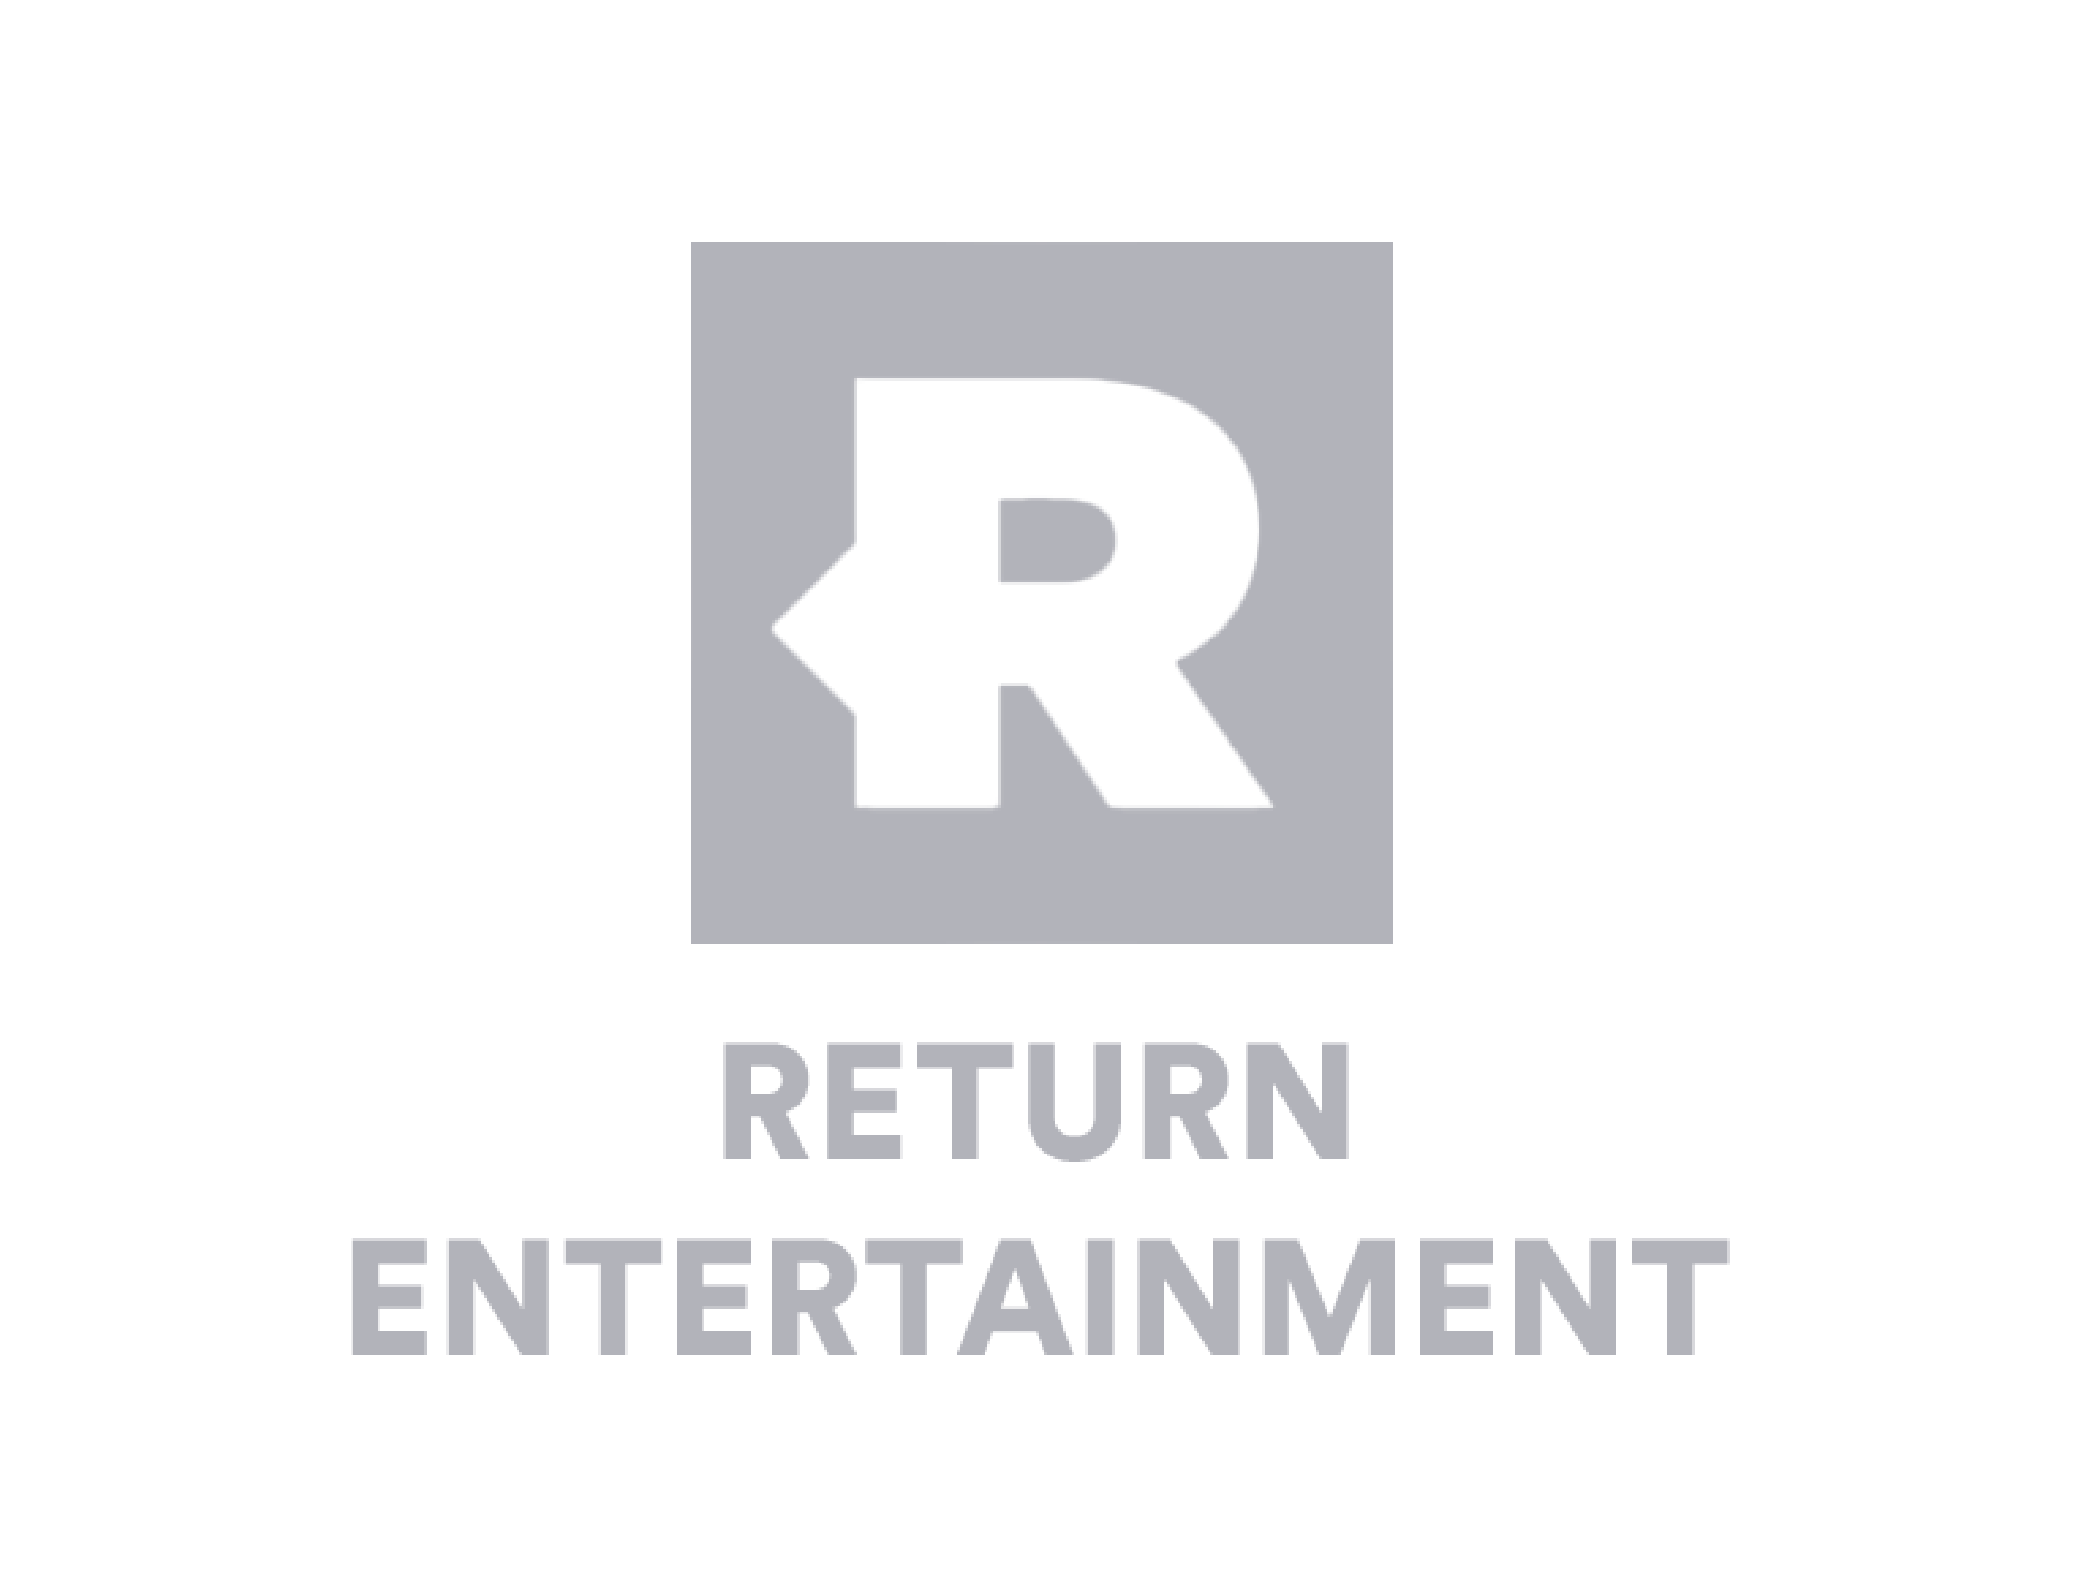 Return Entertainment GameDev logo - trusted partners of 8Bit gaming industry recruitment